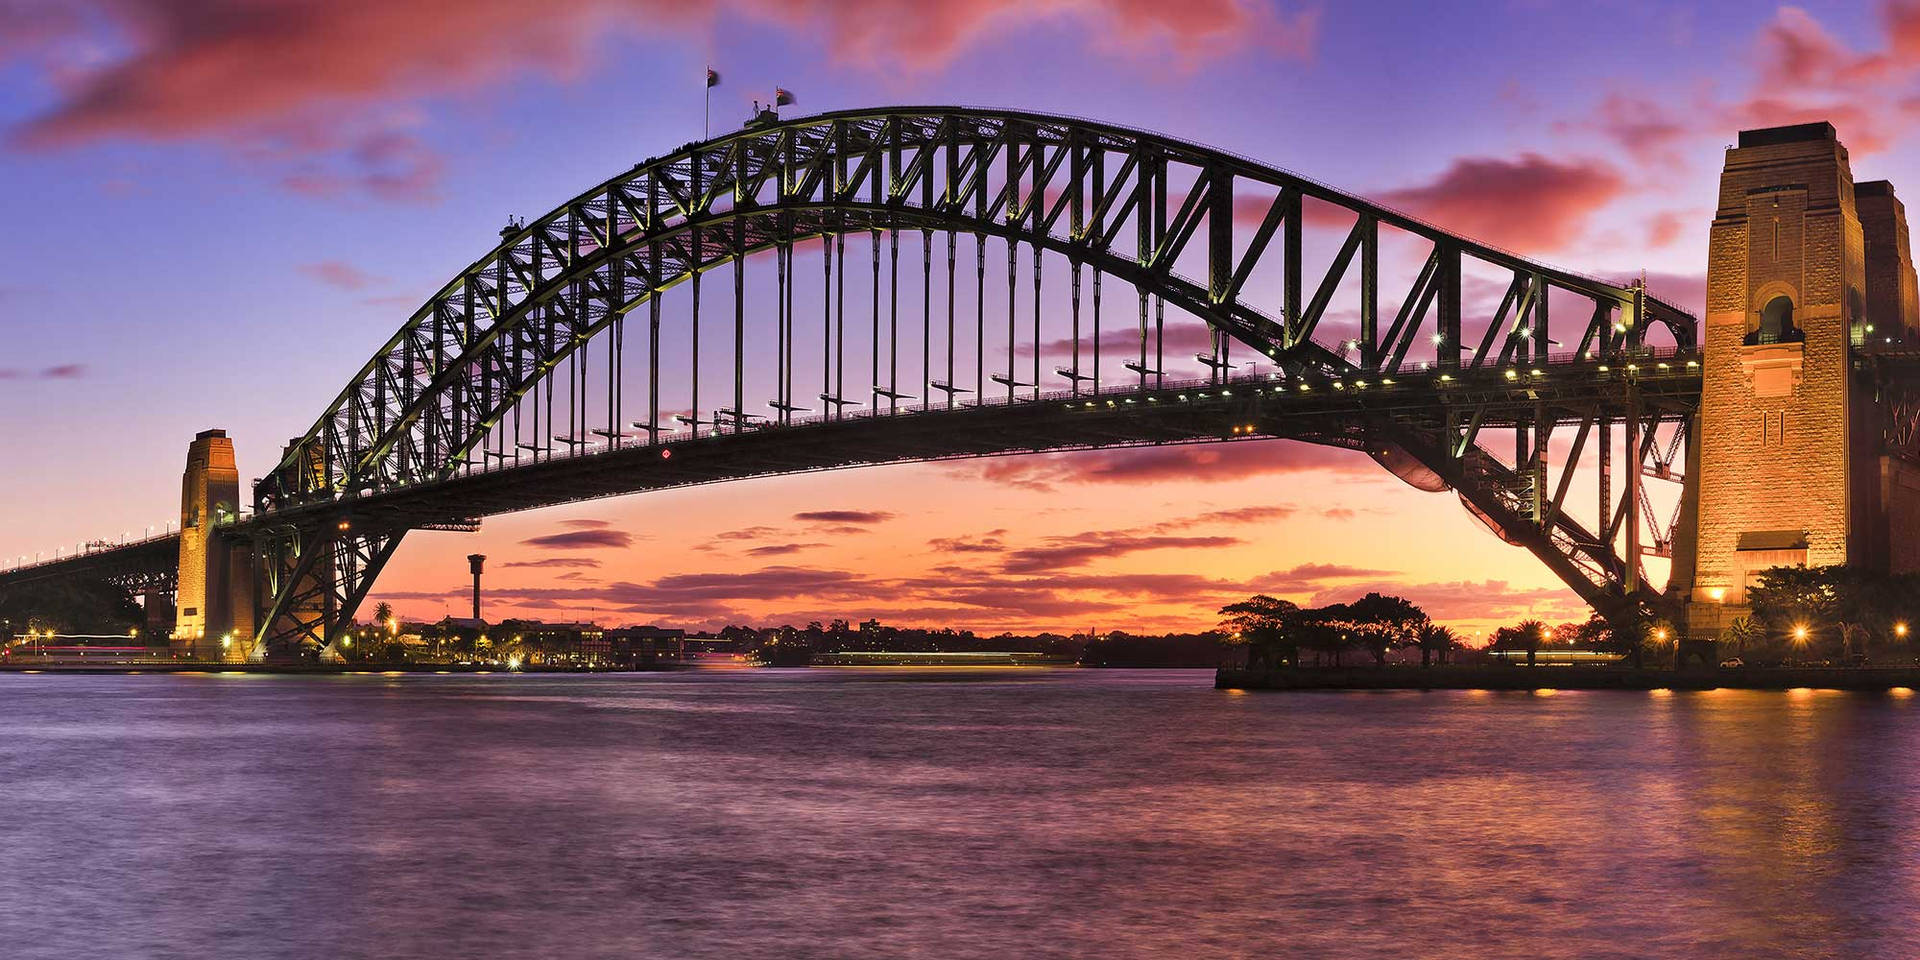 Sydney Harbour Bridge Wallpaper